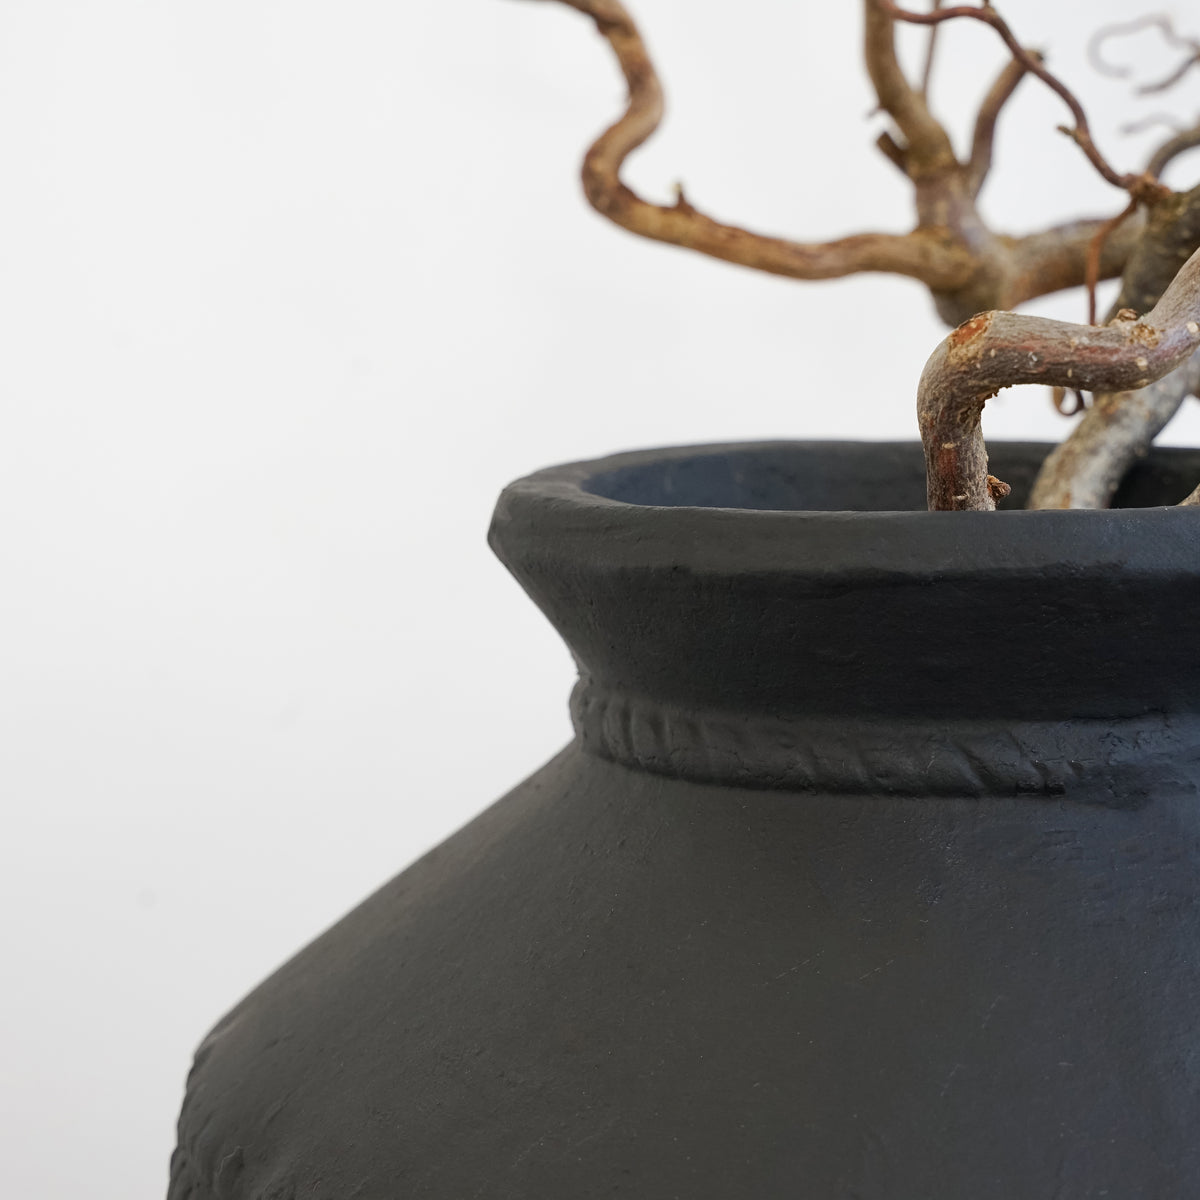 Black Textured Terracotta Large Vase detail shot of rim